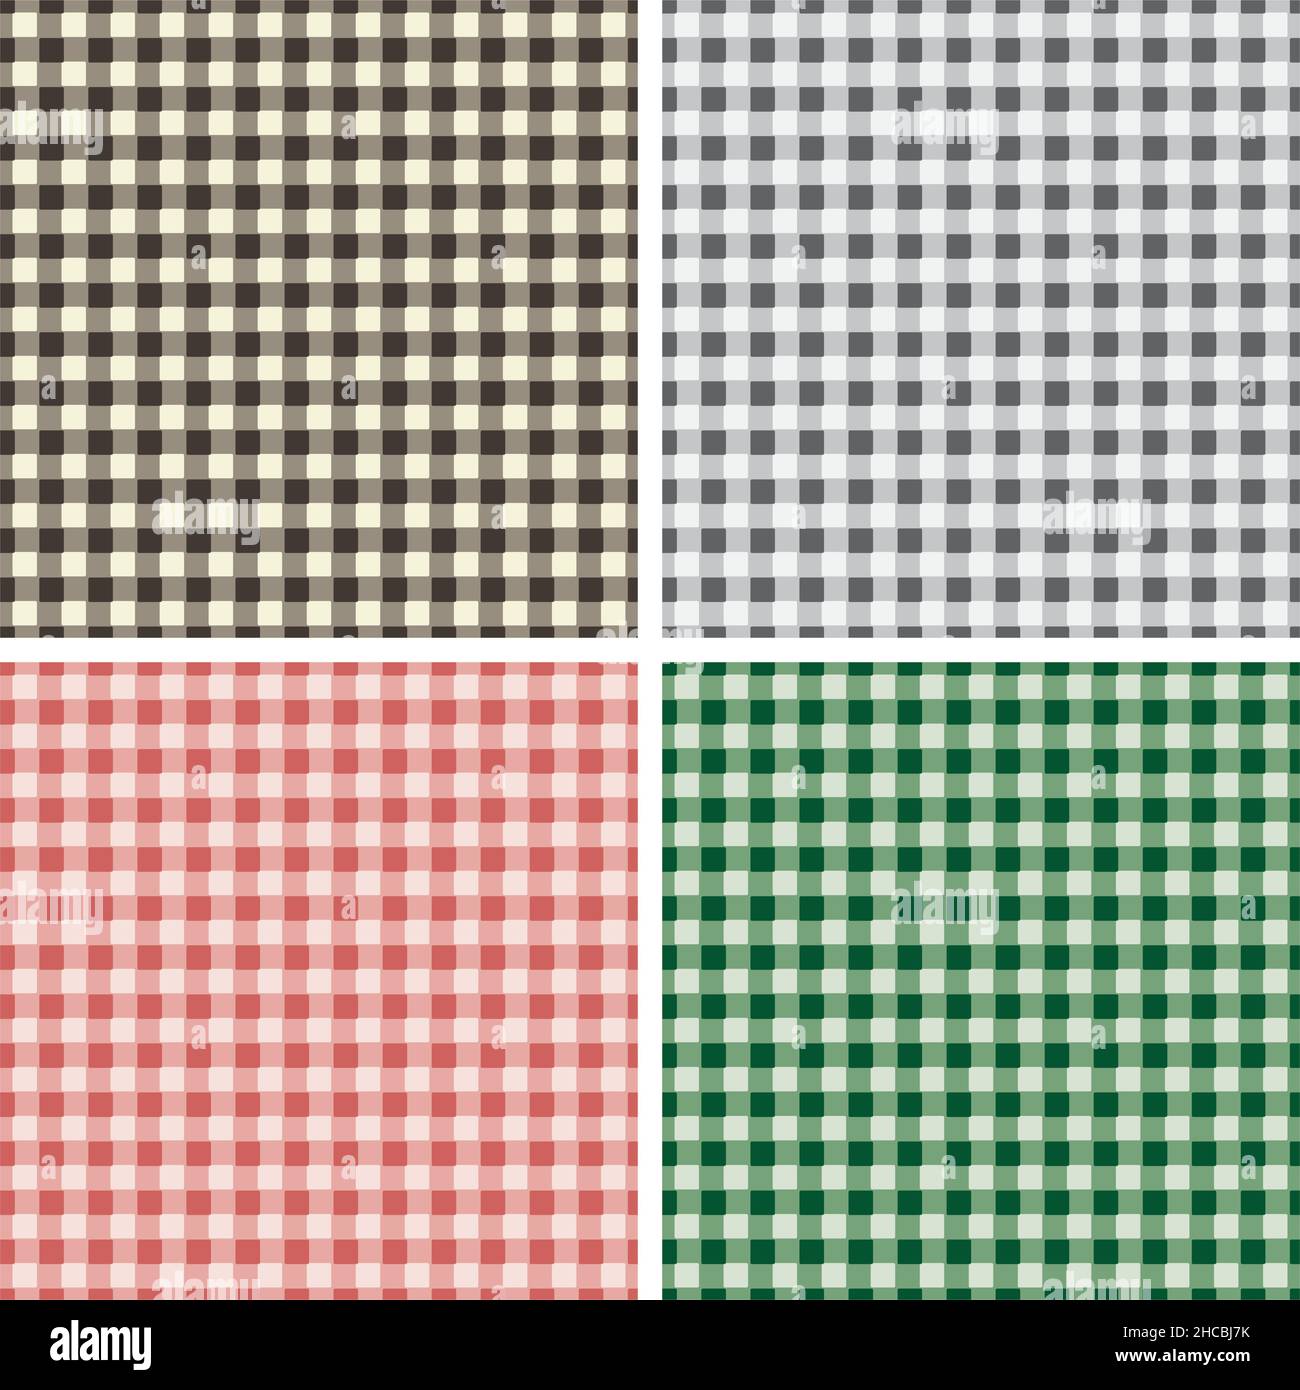 Nahtlose karierte Muster in vier Farben - Vektorgrafiken Stock Vektor